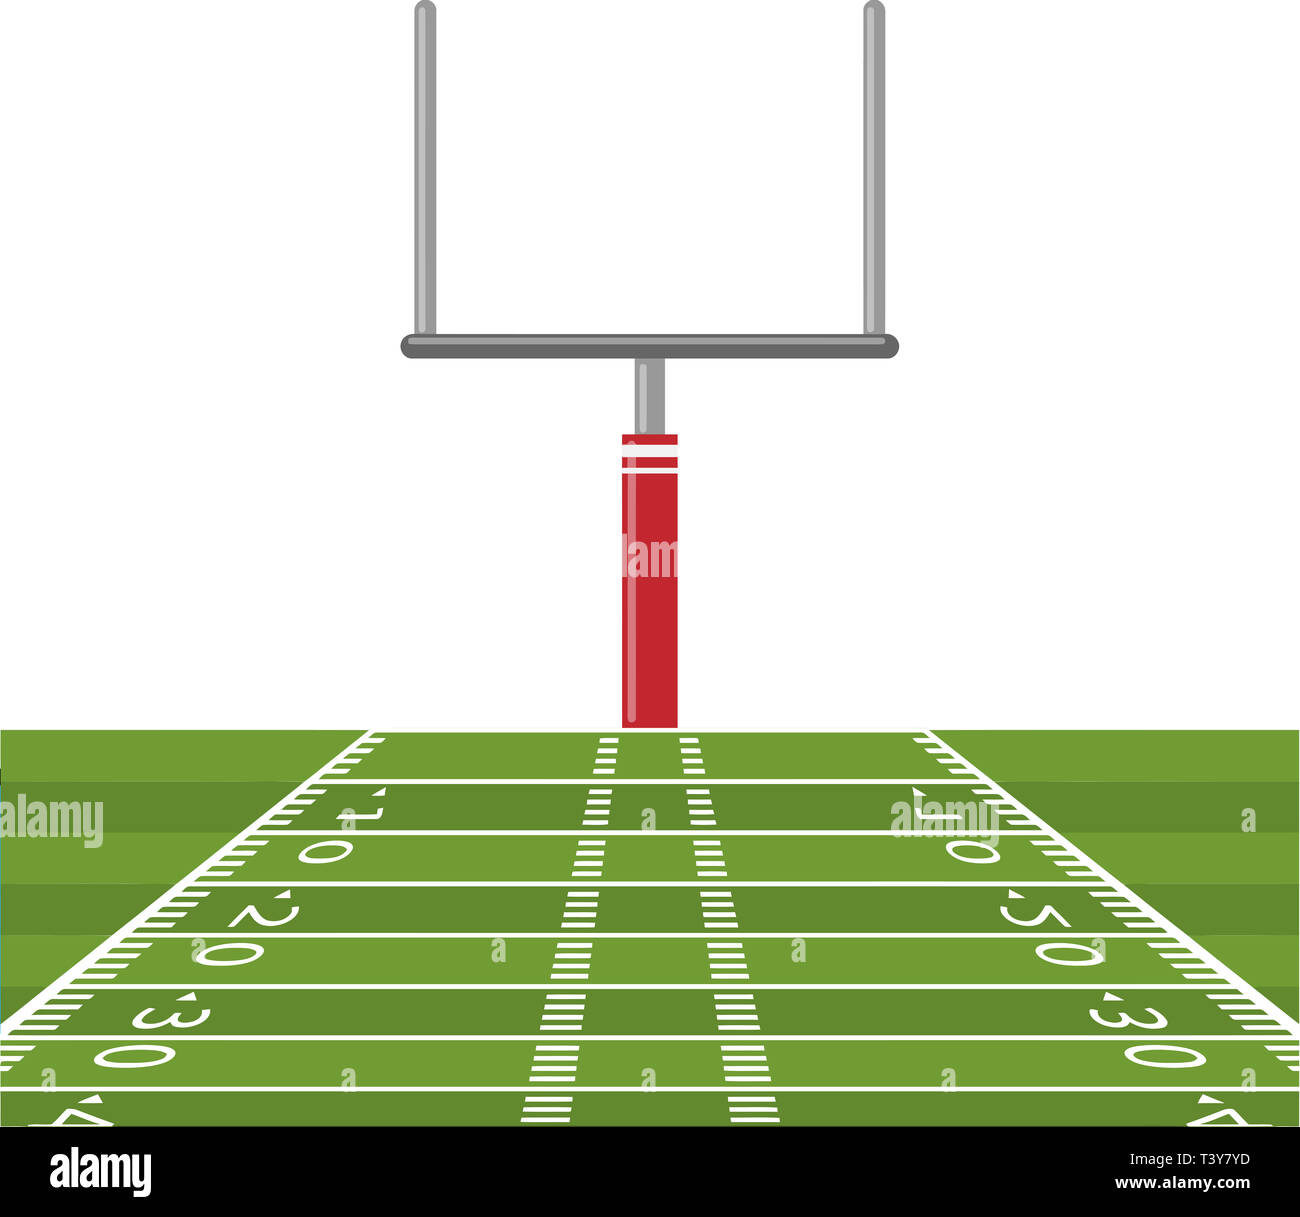 American football field goal illustration jeu touchdown Banque D'Images